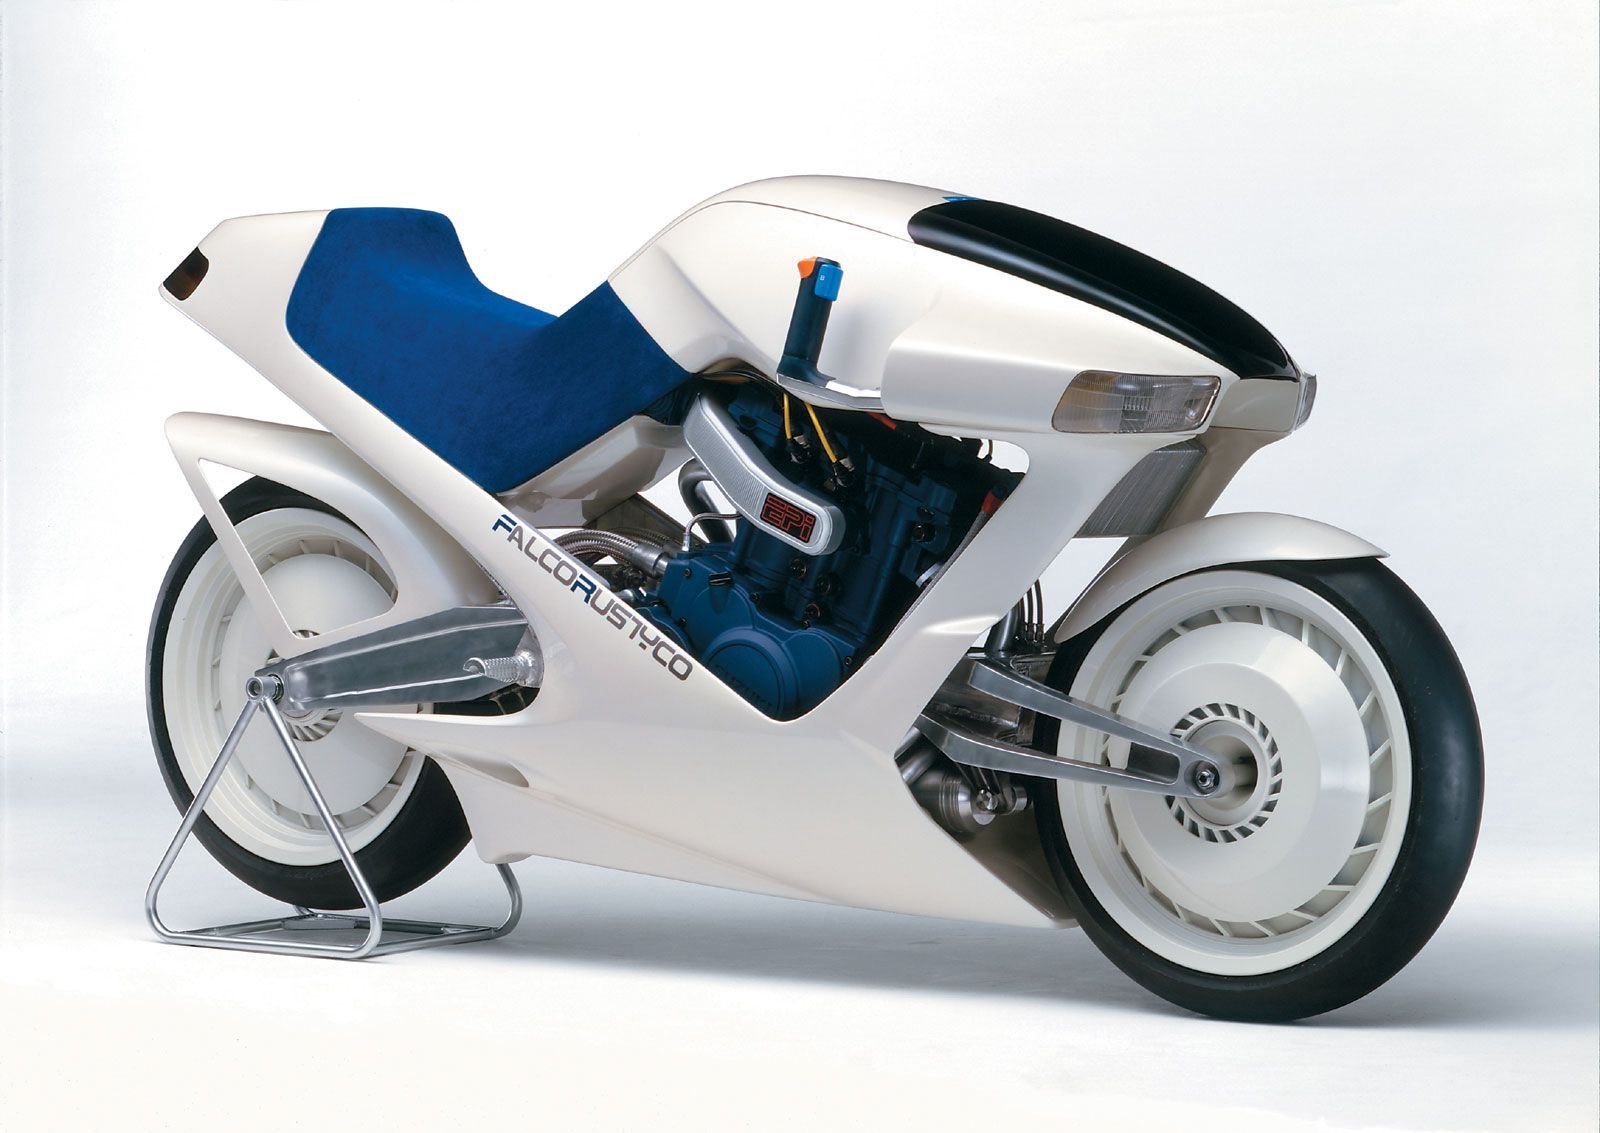 Suzuki Falcorustyco concept bike